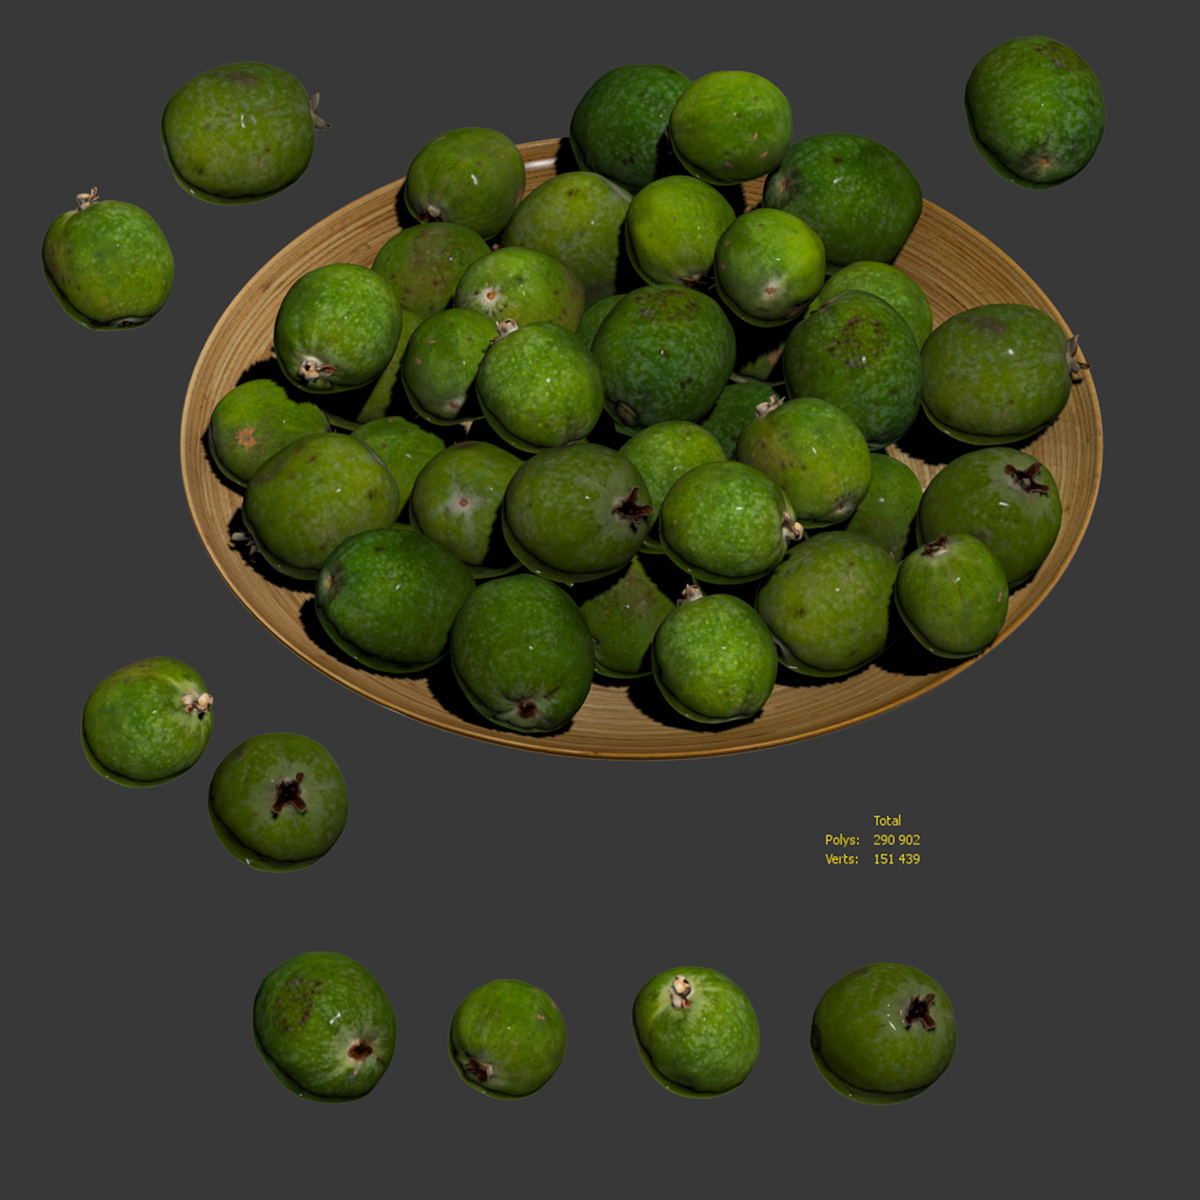 3D 3D scans 3dmodel 3ds max CGI feijoa fruits Render visualization